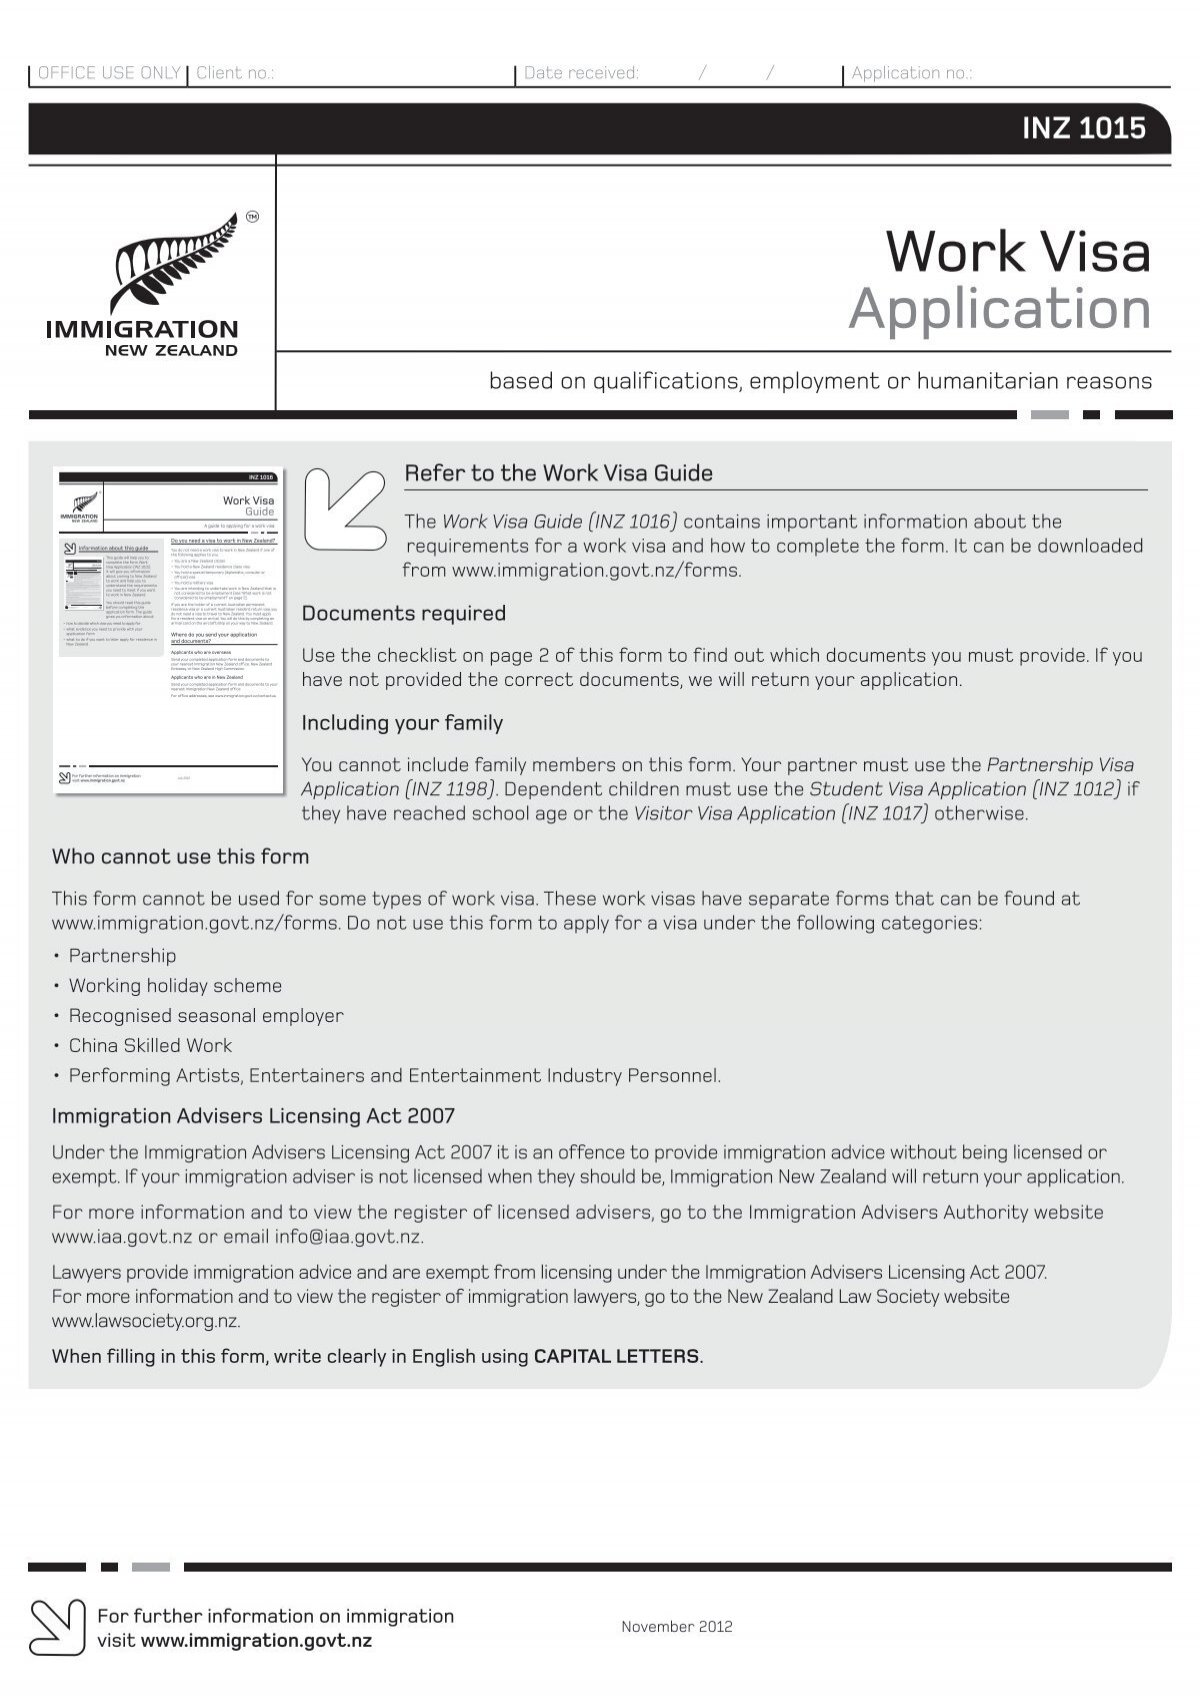 Visa Application 1015) New Zealand Immigration Service